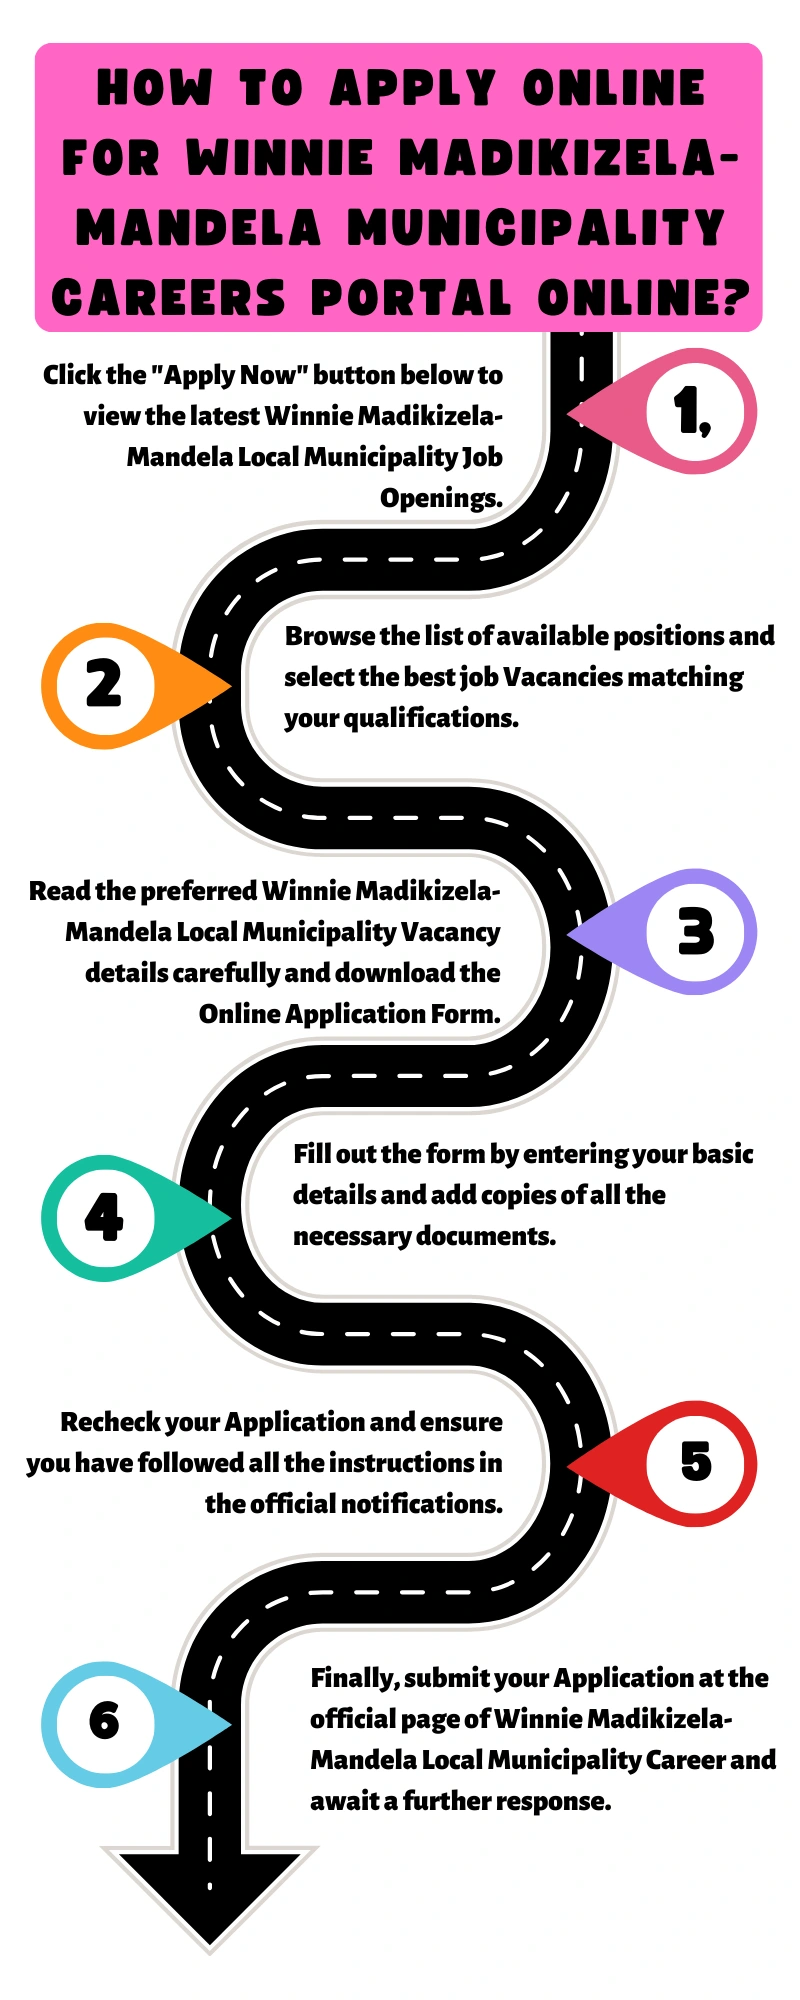 How to Apply online for Winnie Madikizela-Mandela Municipality Careers Portal Online?